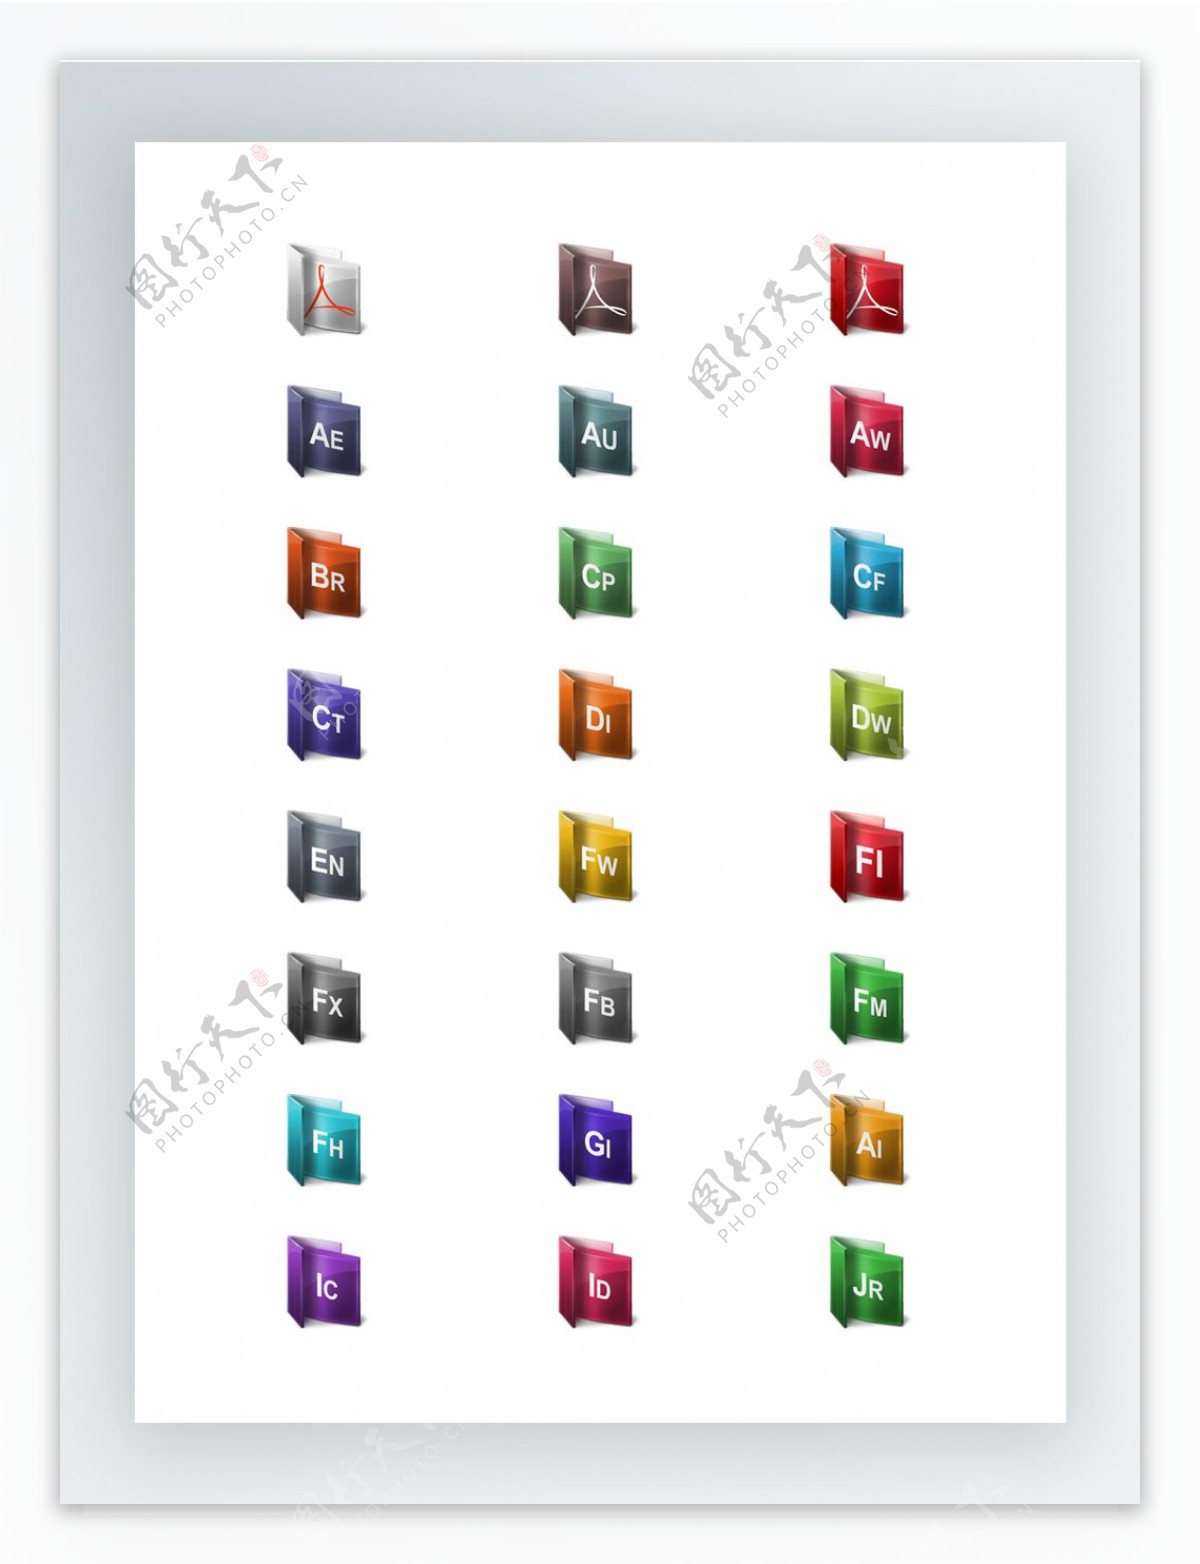 Adobe系列软件文件夹图标集